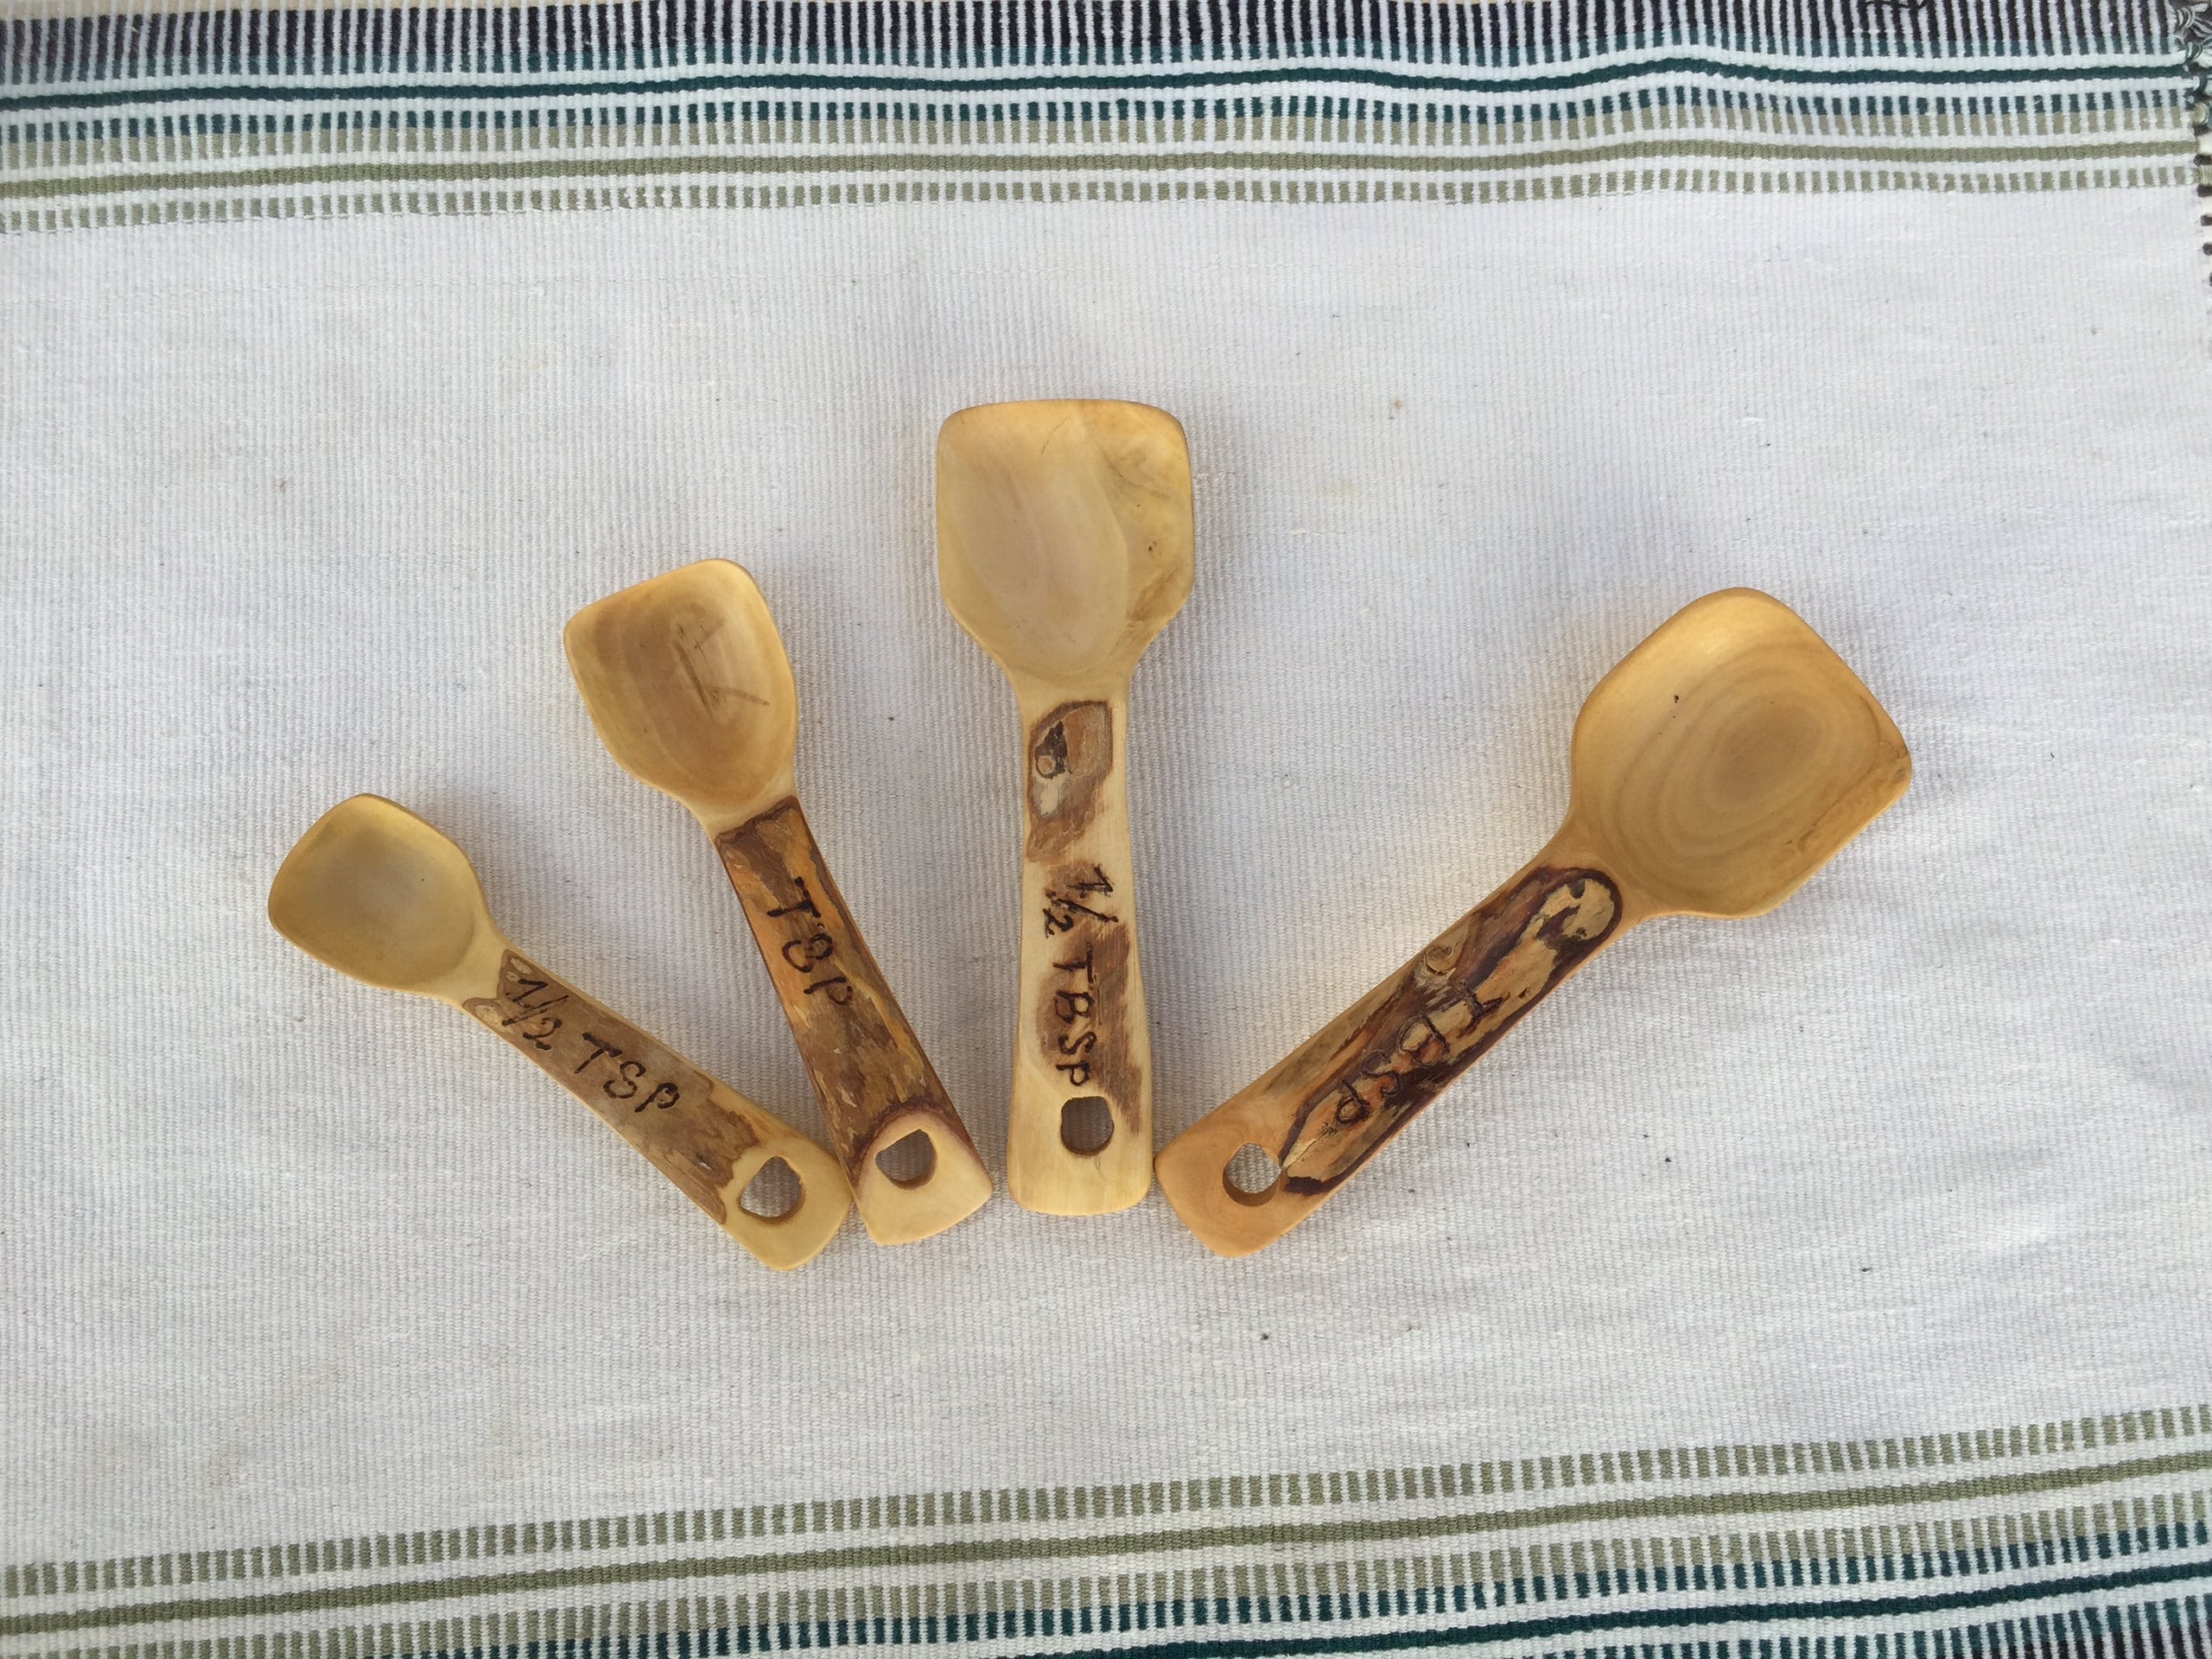 Measuring Spoon Set - Fair Trade Guatemalan Wood Items